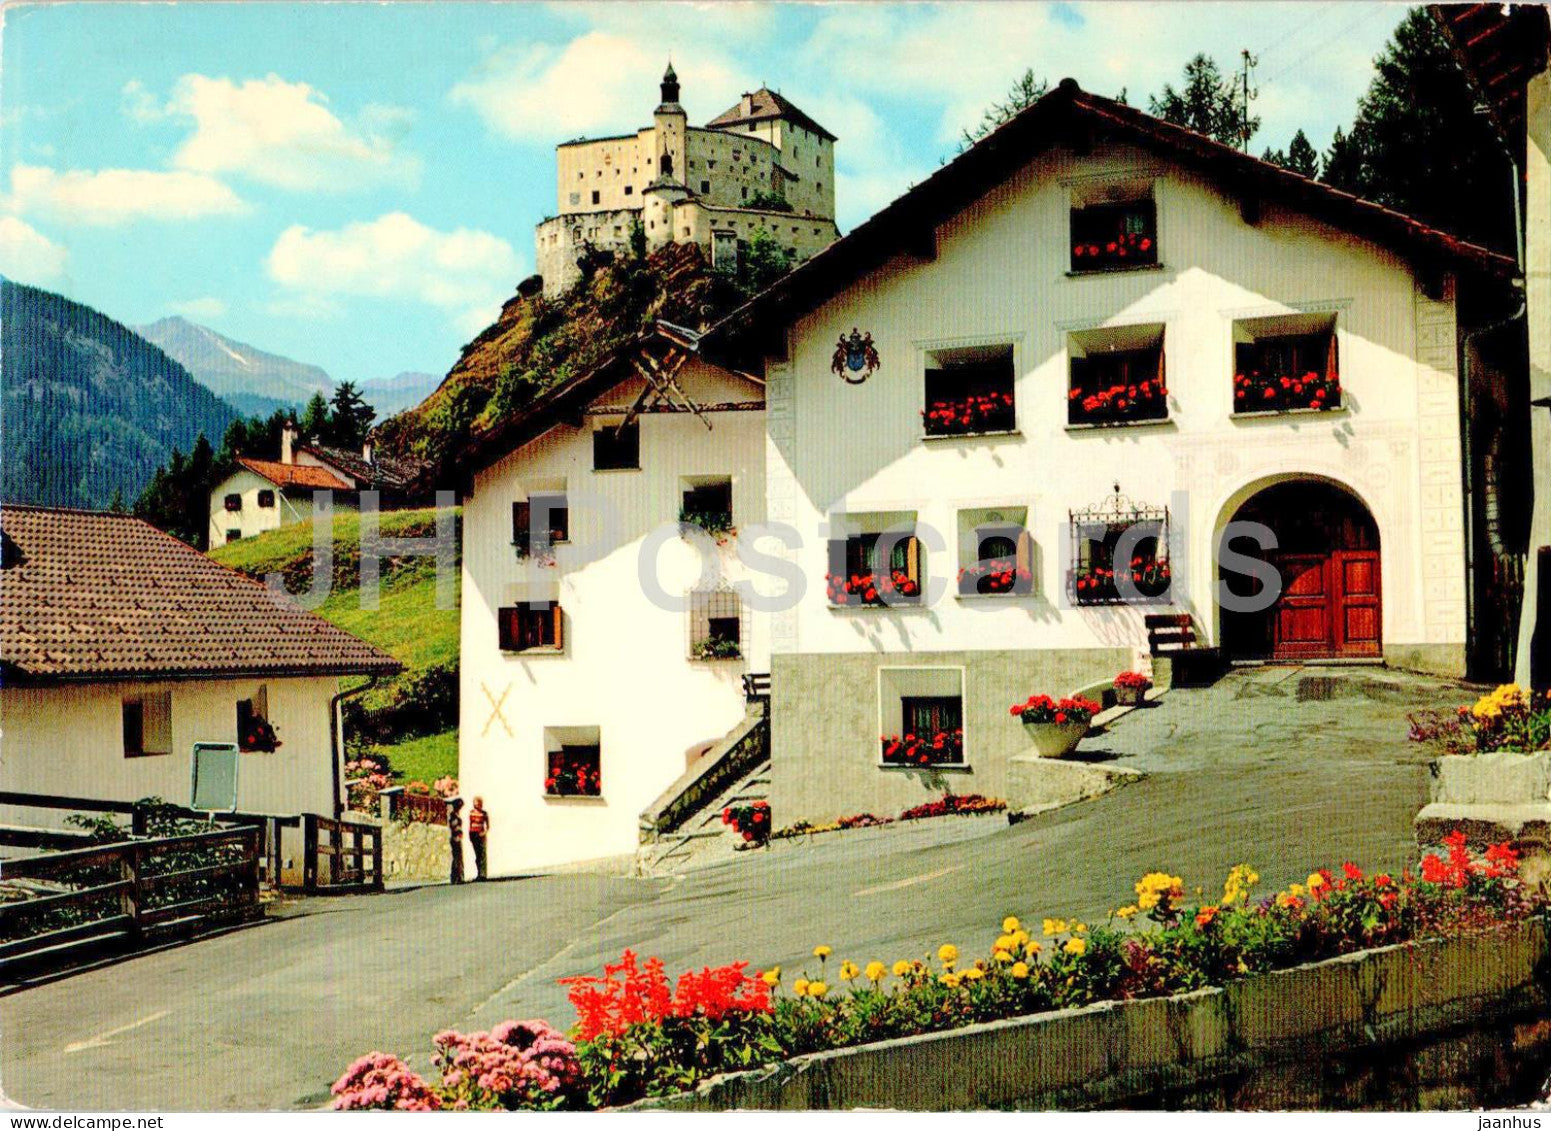 Schloss Tarasp - castle - 1973 - Switzerland - used - JH Postcards